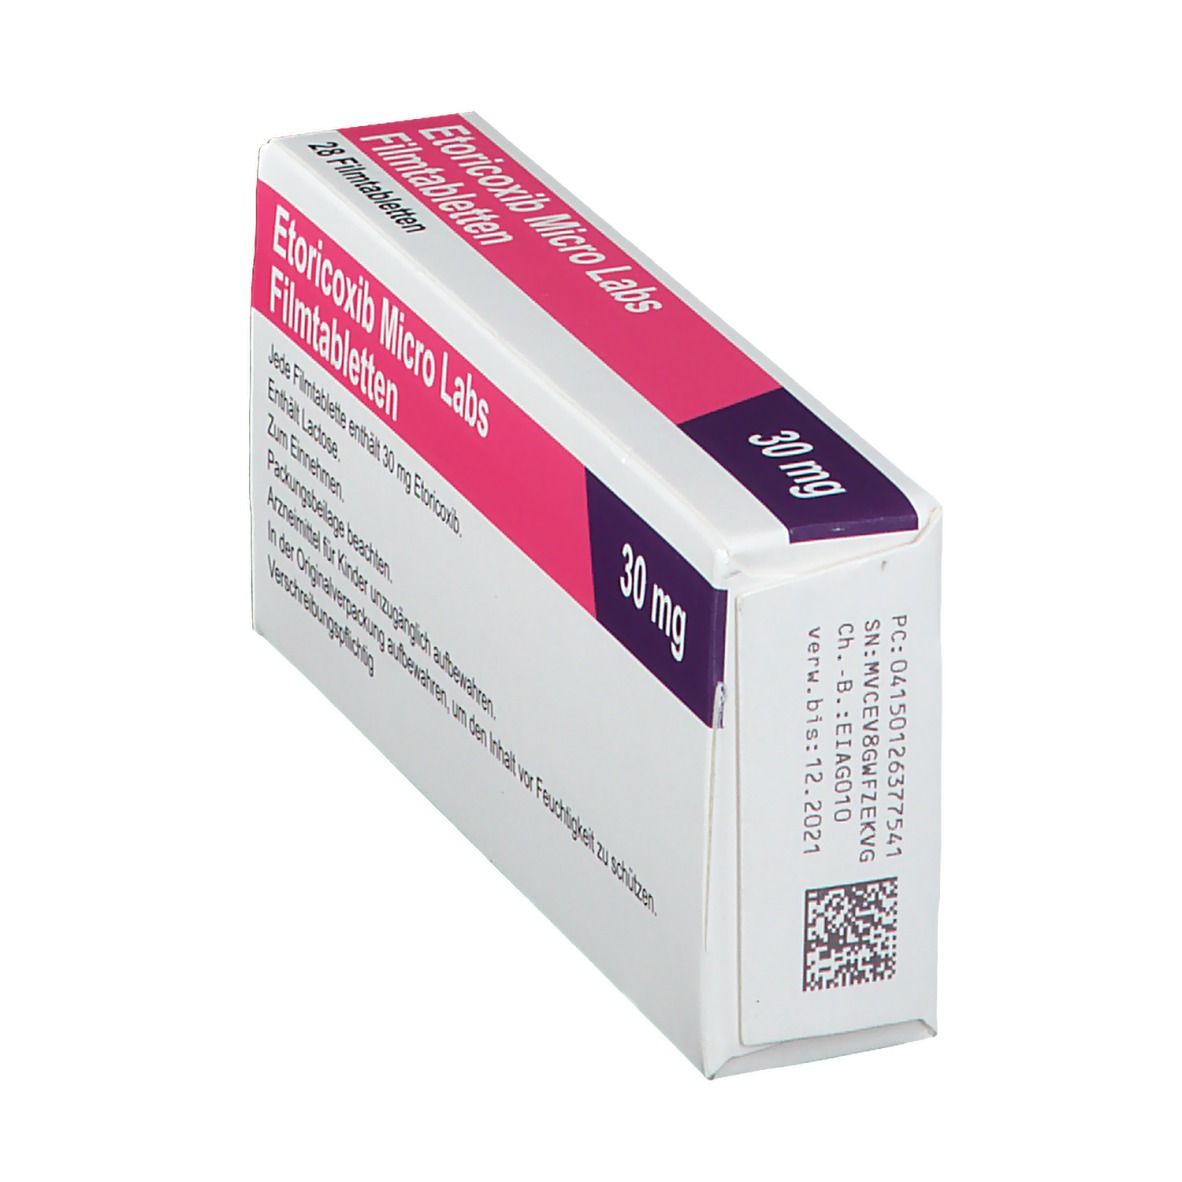 Etoricoxib Micro Labs 30 mg